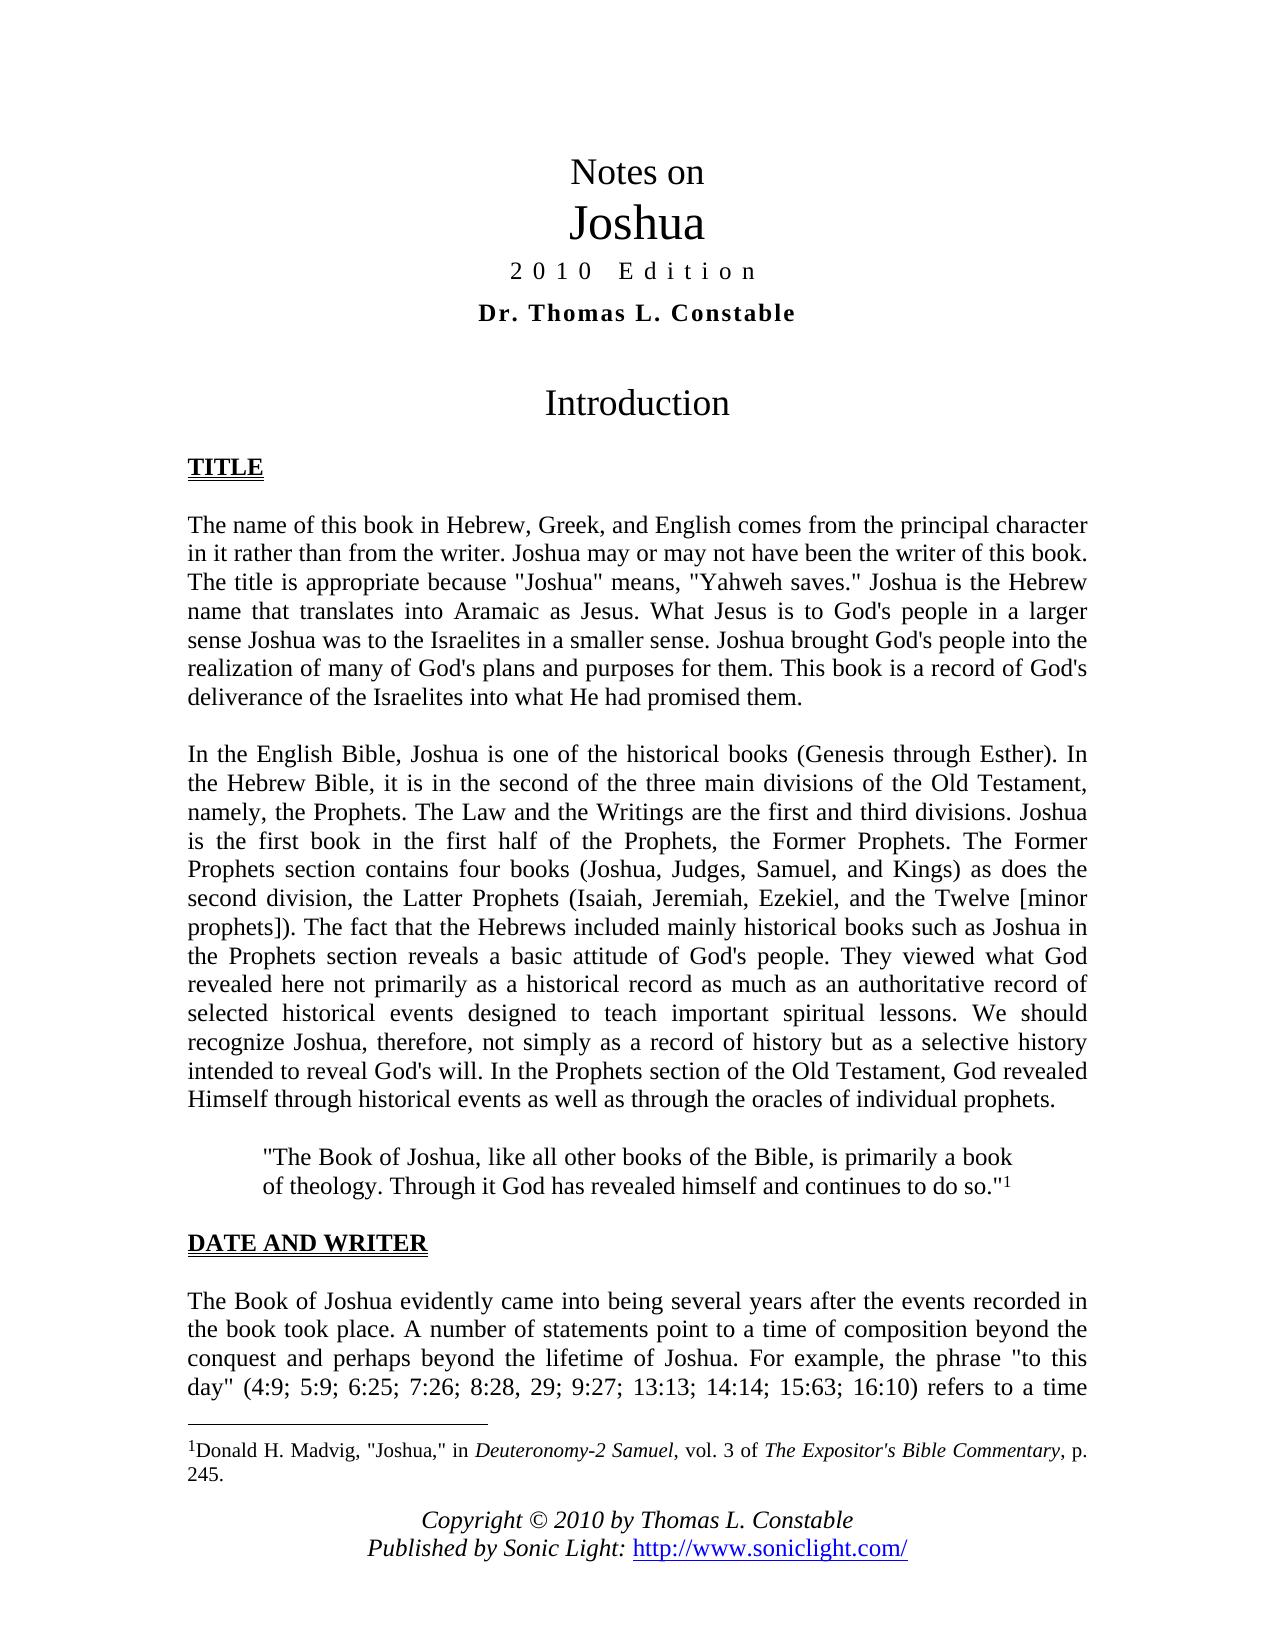 Joshua by Dr. Thomas L. Constable